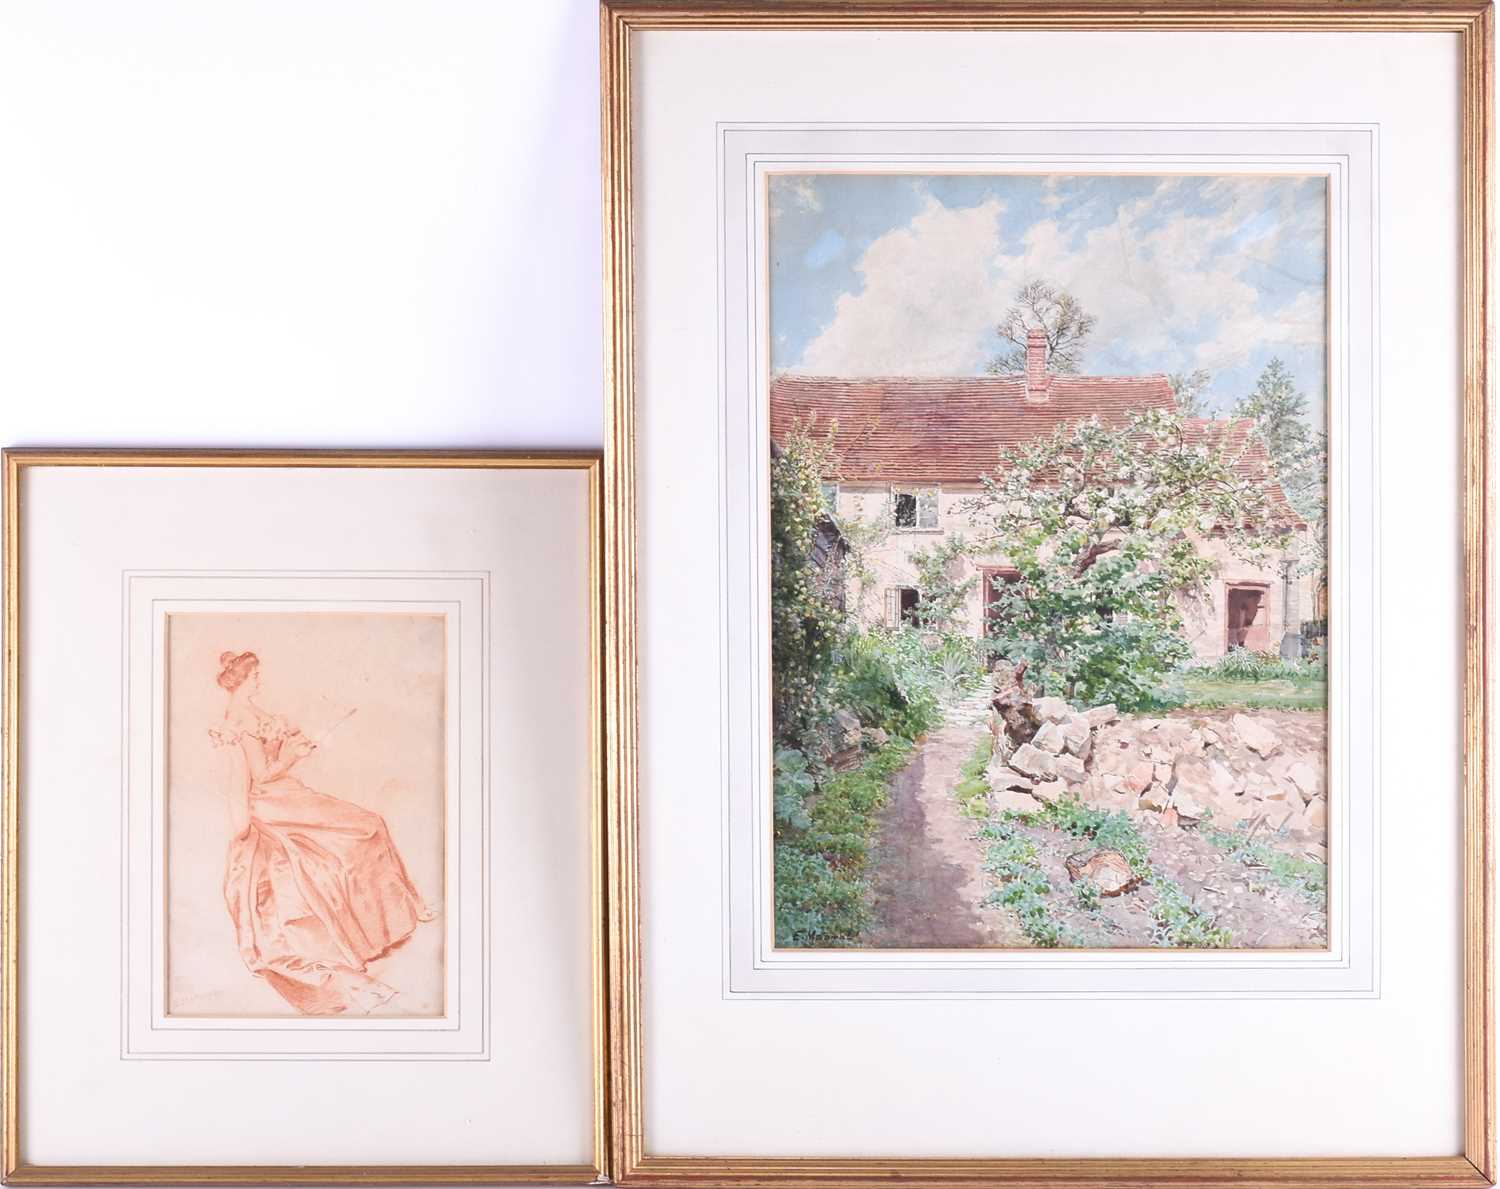 Eduardo Matania (1847-1929) Italian, a rural cottage scene, watercolour on paper, together with a